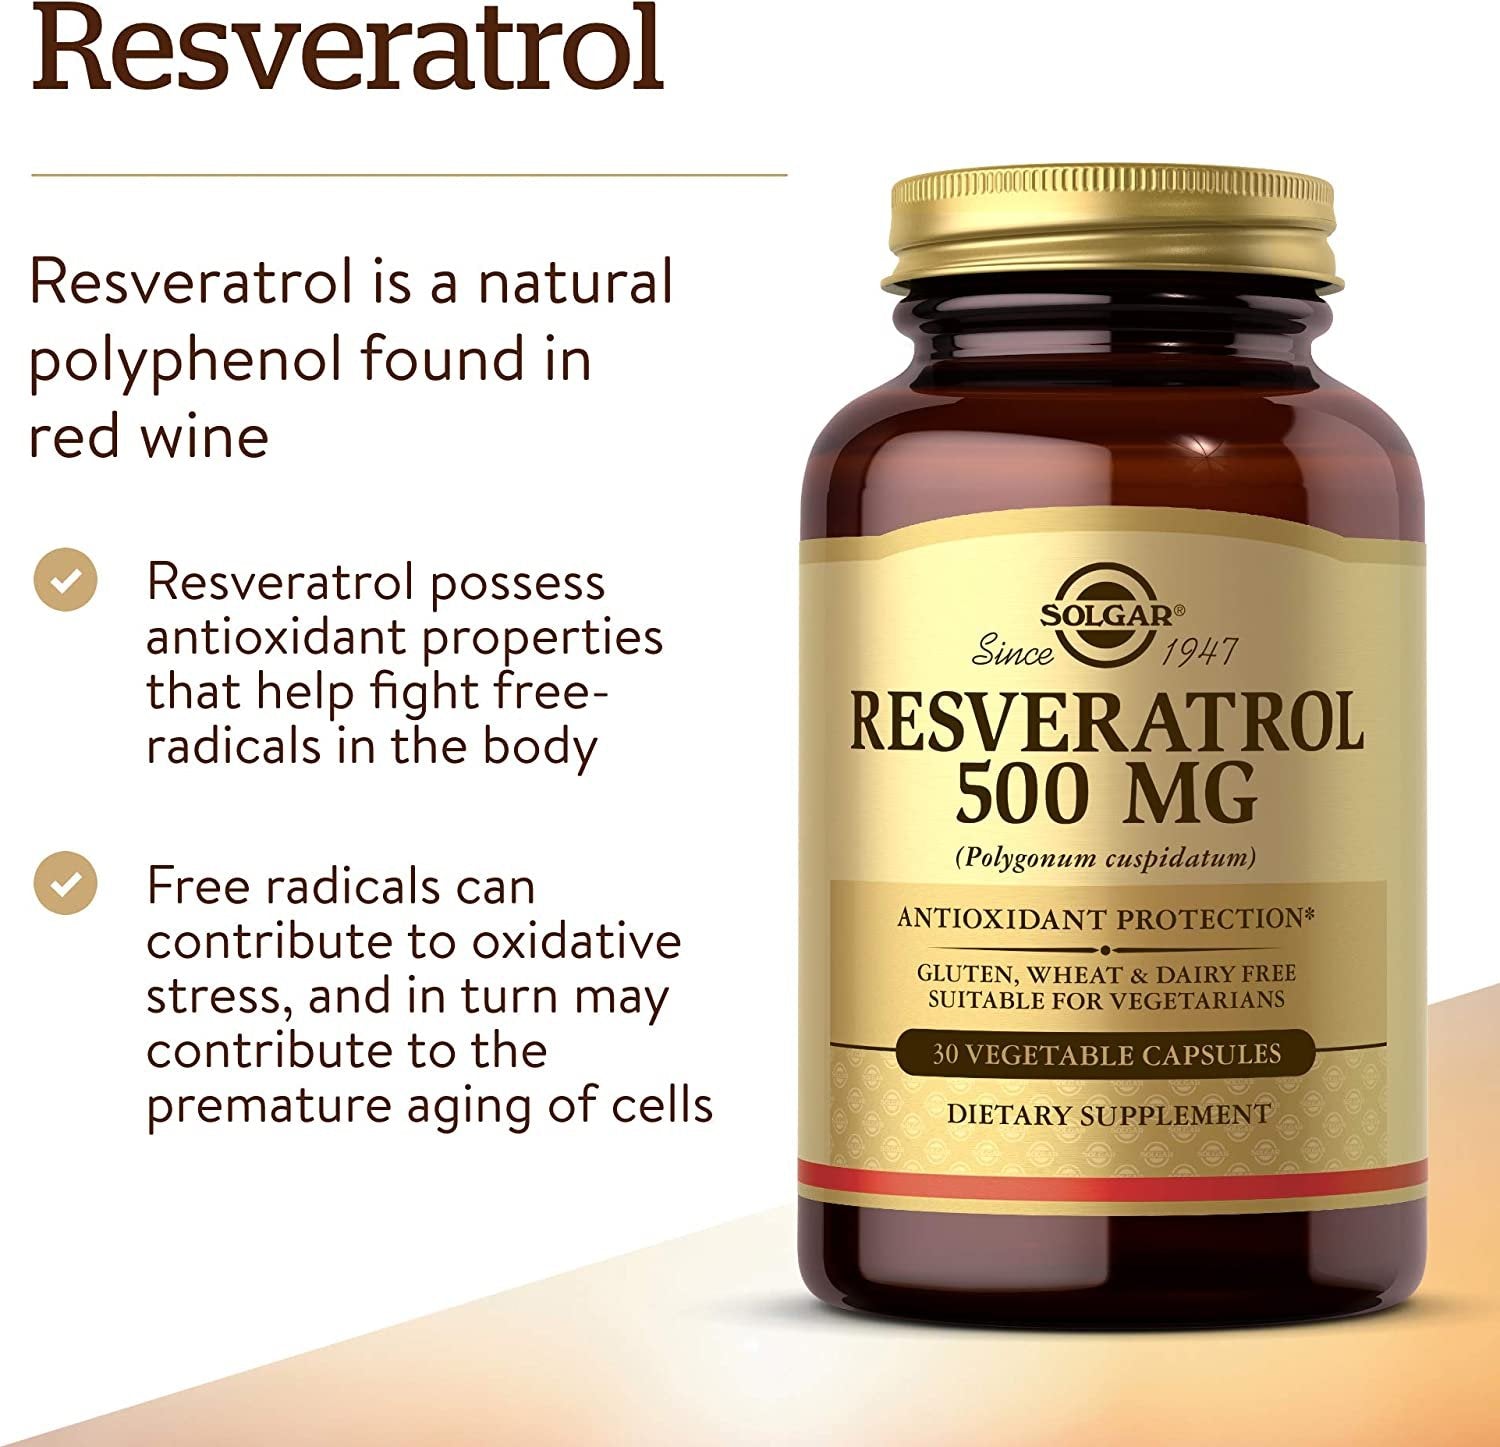 Solgar Resveratrol 500 mg - Antioxidant Protection - Gluten, Dairy Free - 30 Ct